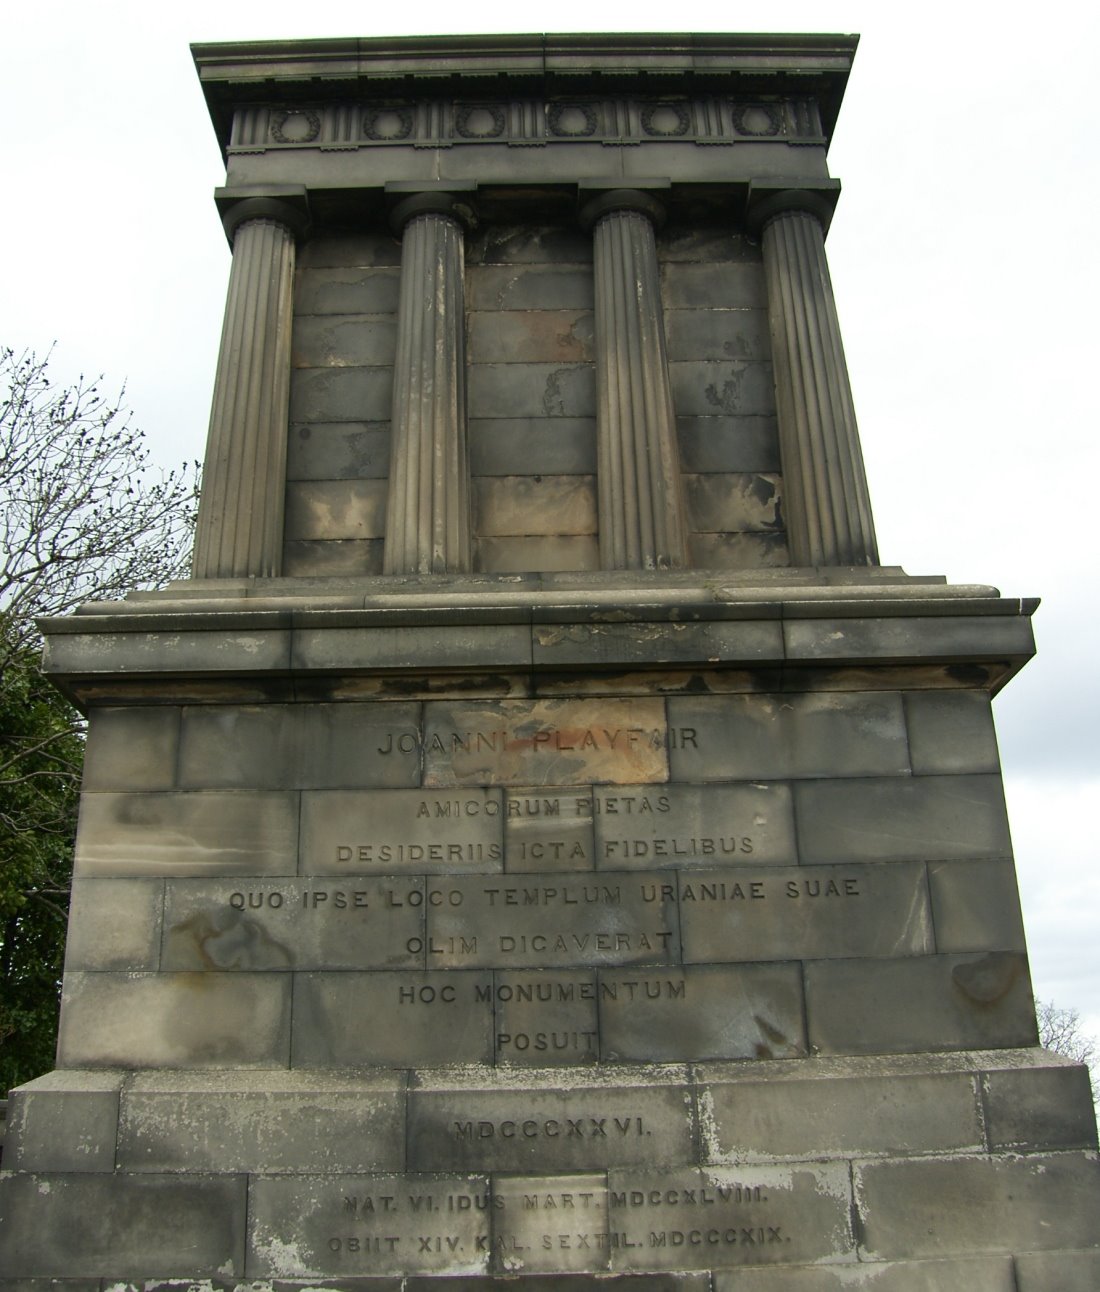 [John+Playfair+Monument+Calton+Hill+Scotland.jpg]